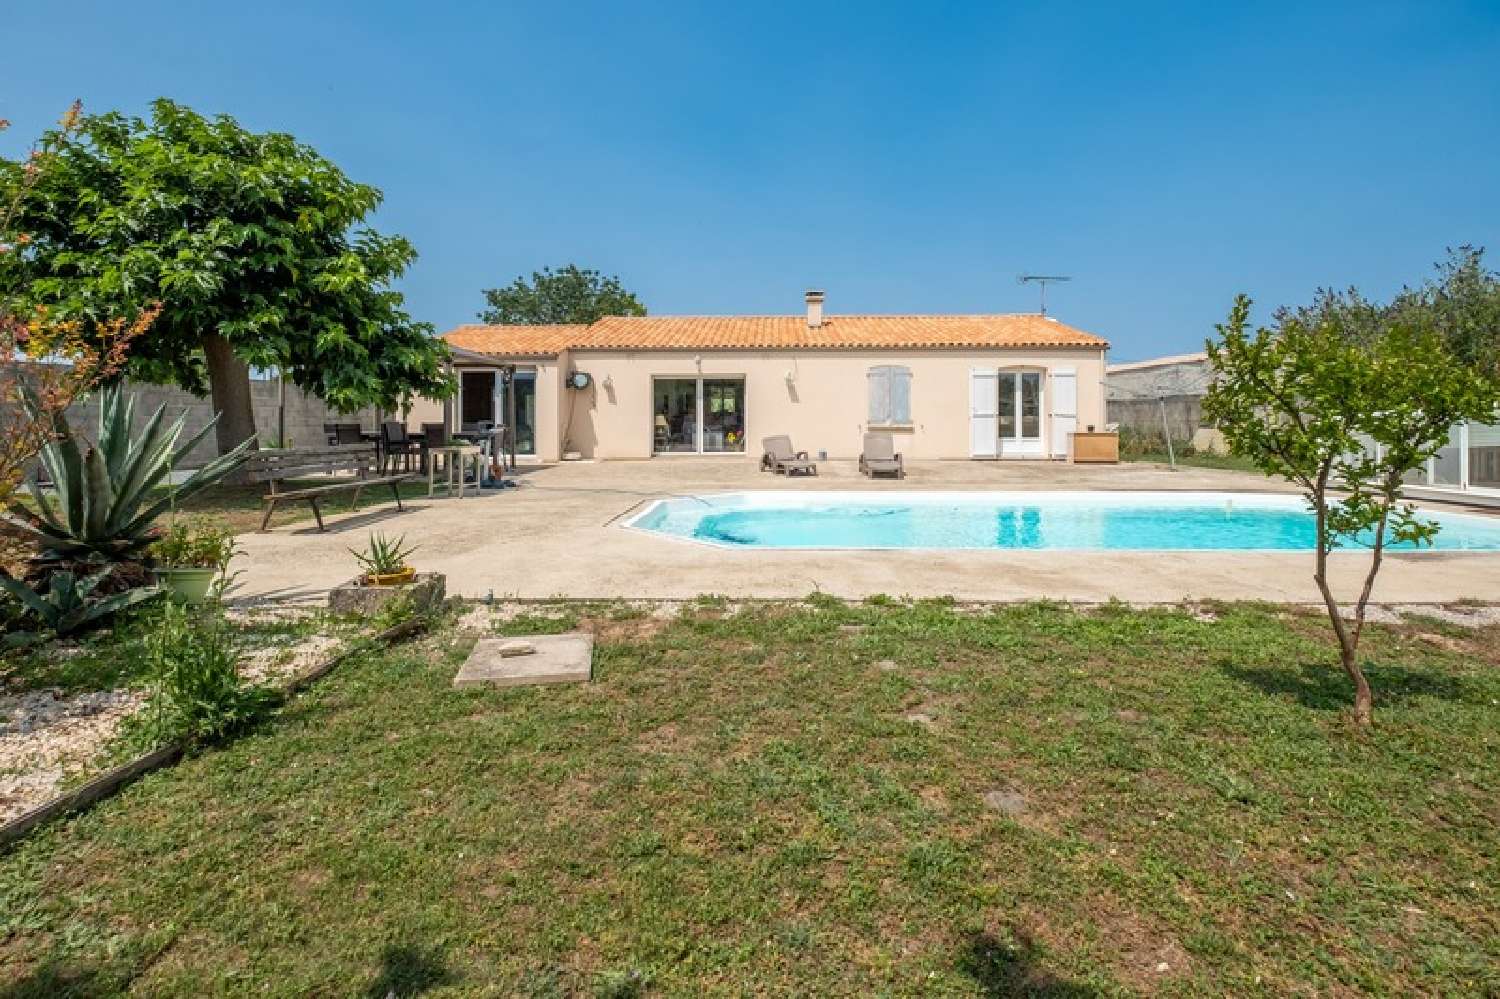  for sale house La Rochelle Charente-Maritime 1